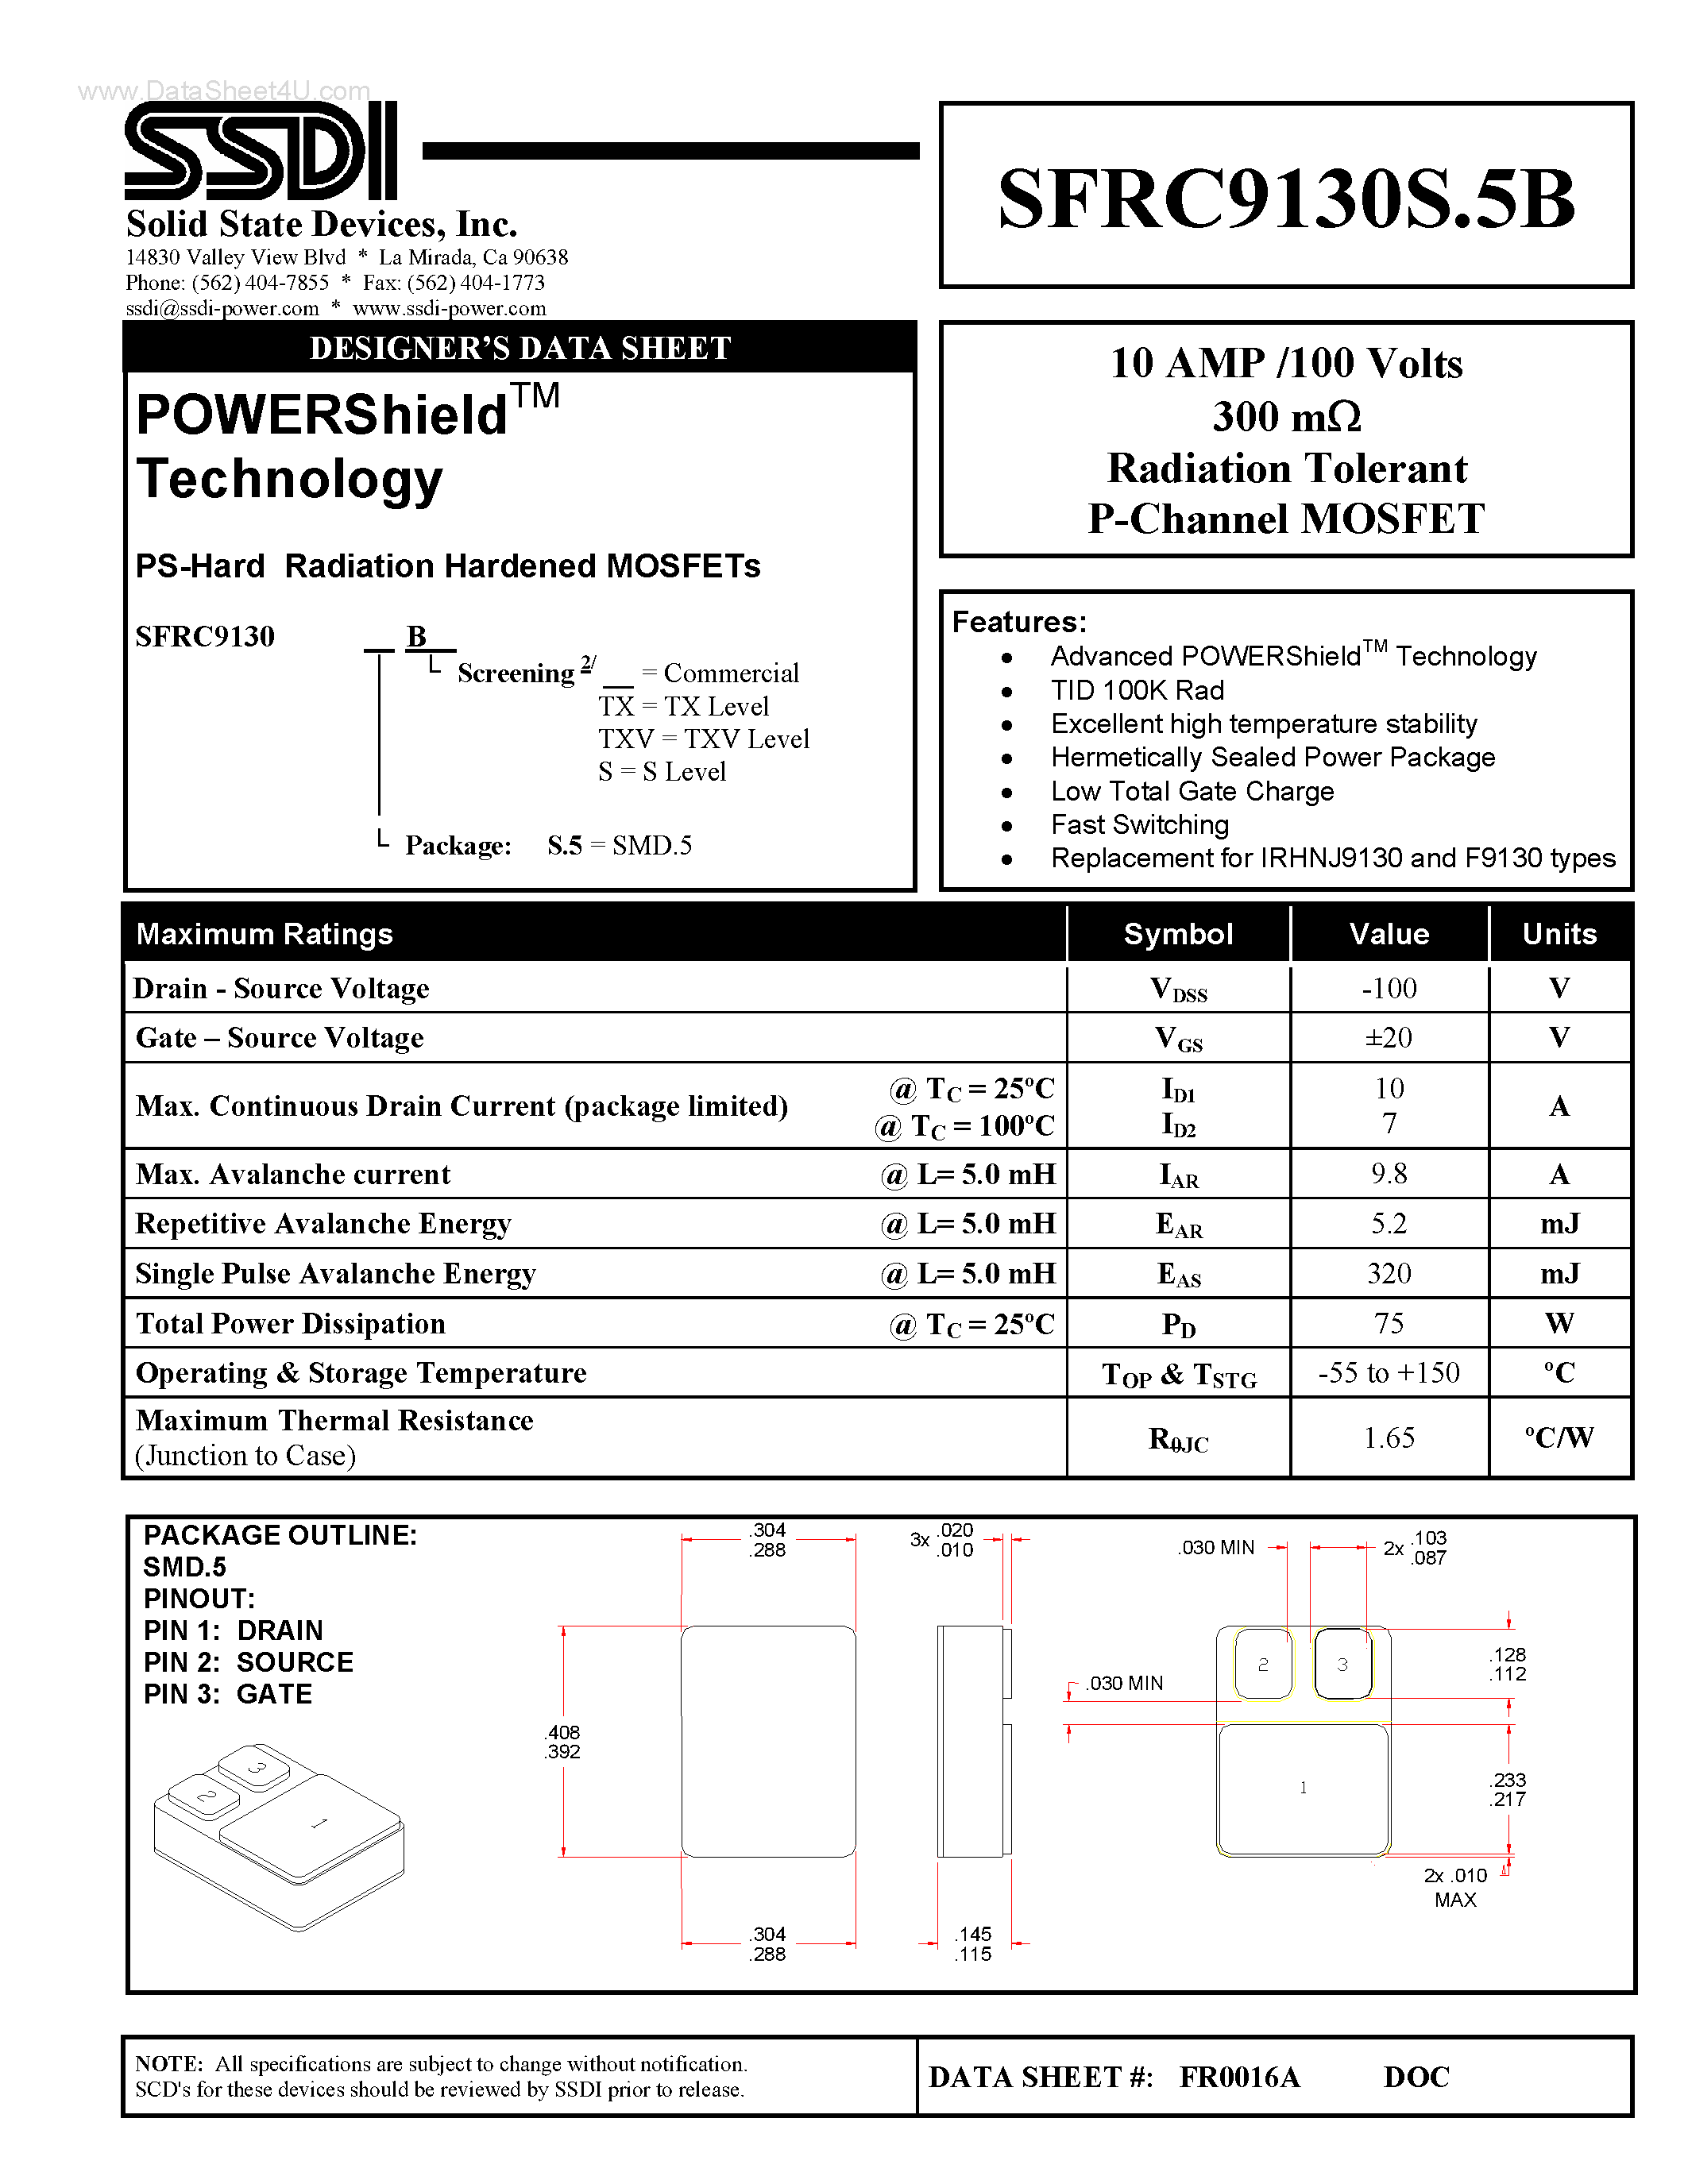 Даташит SFRC9130S.5B - Radiation Tolerant P-Channel MOSFET страница 1